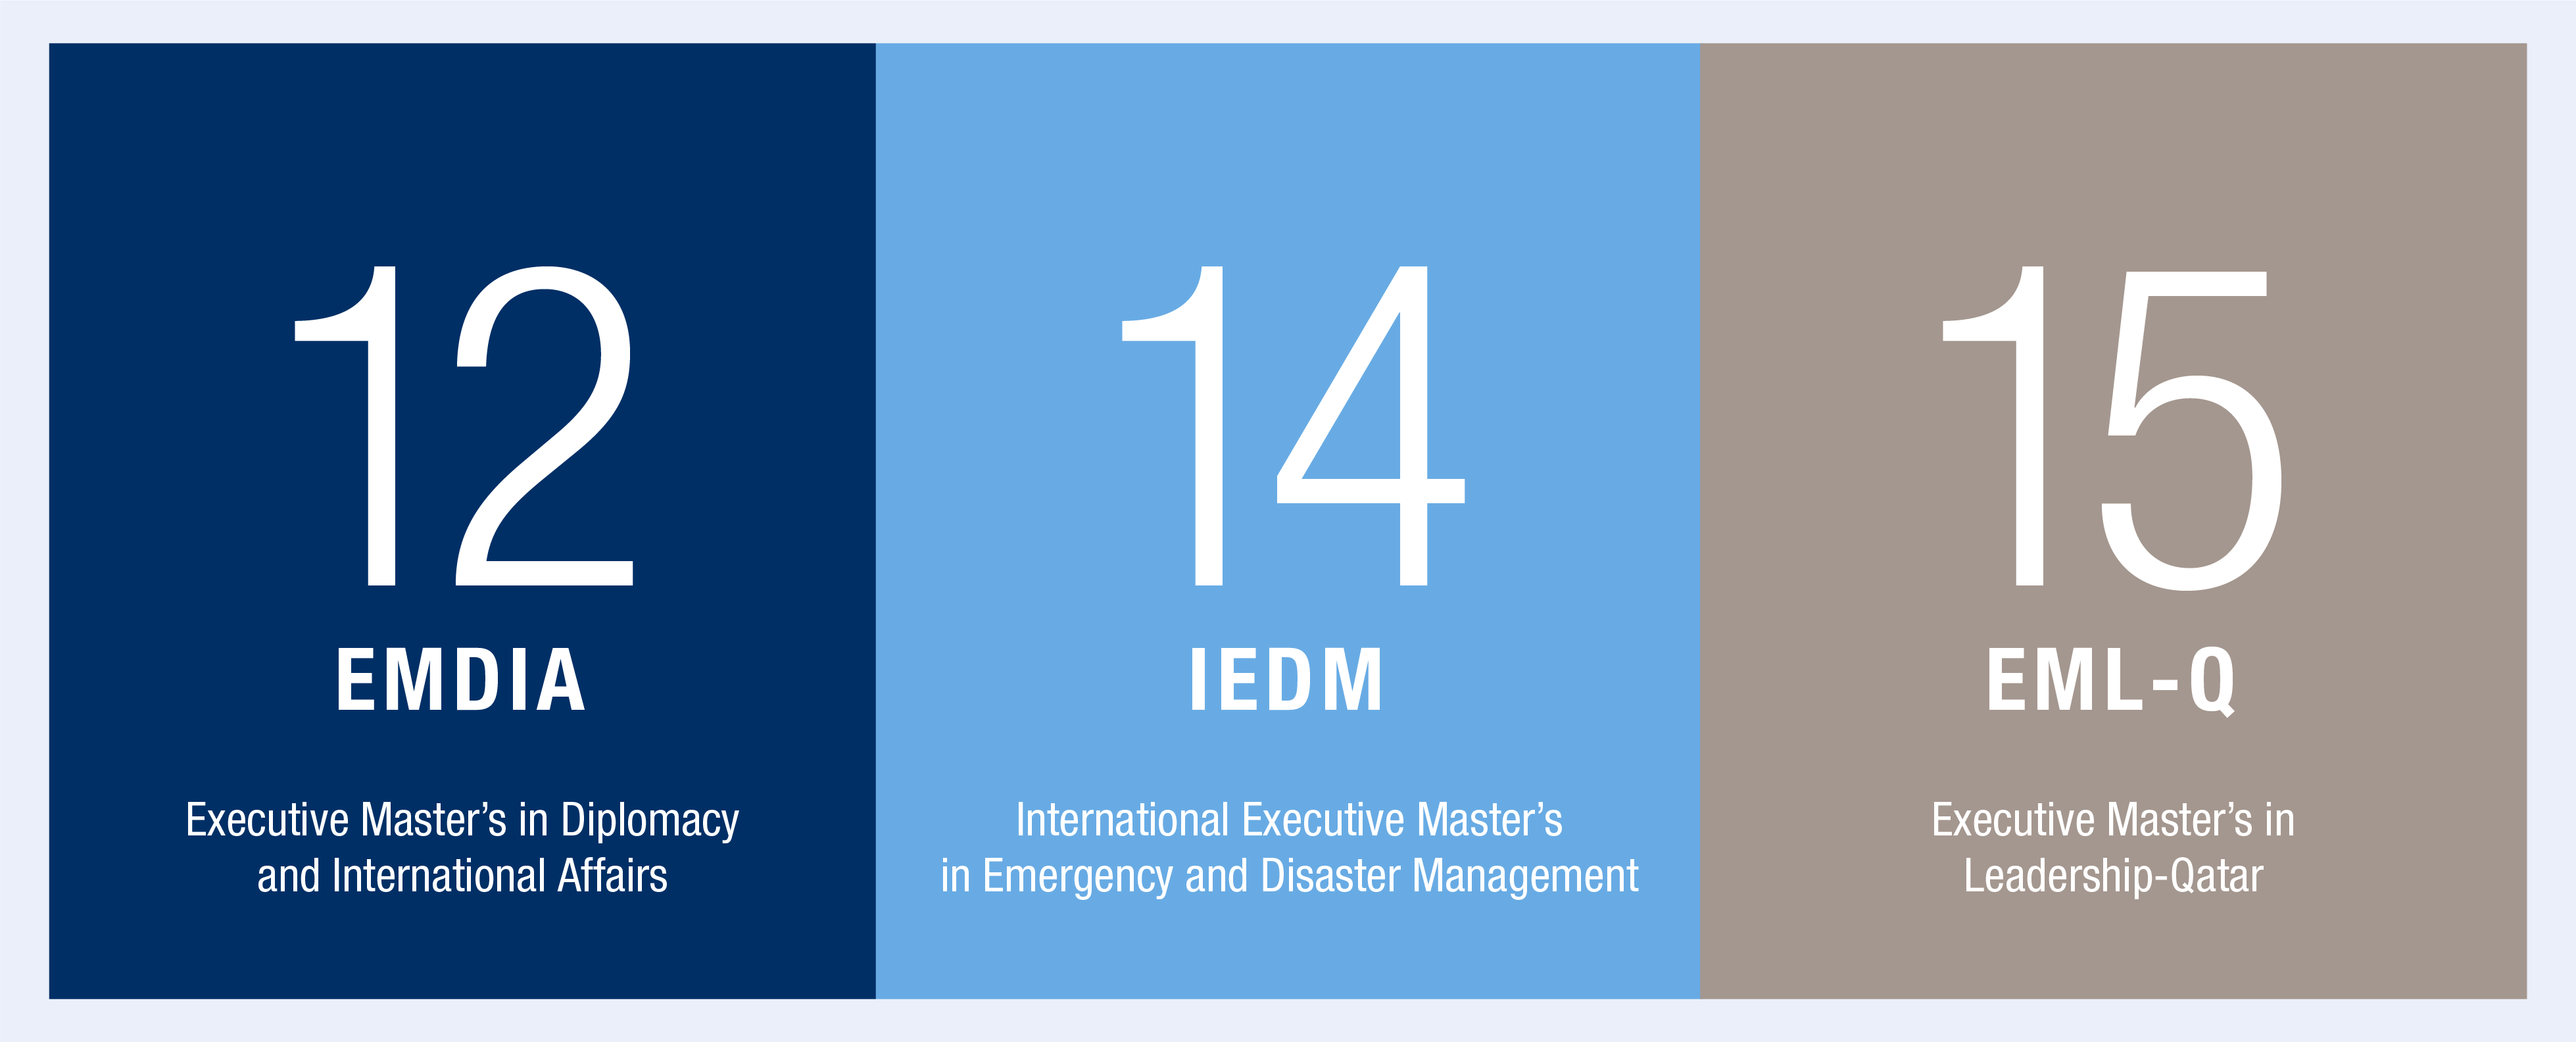 2021-2022 Executive Master Degree Graduates infographic showing number of graduates by program
12 EMDIA
14 IEDM
15 EML-Q